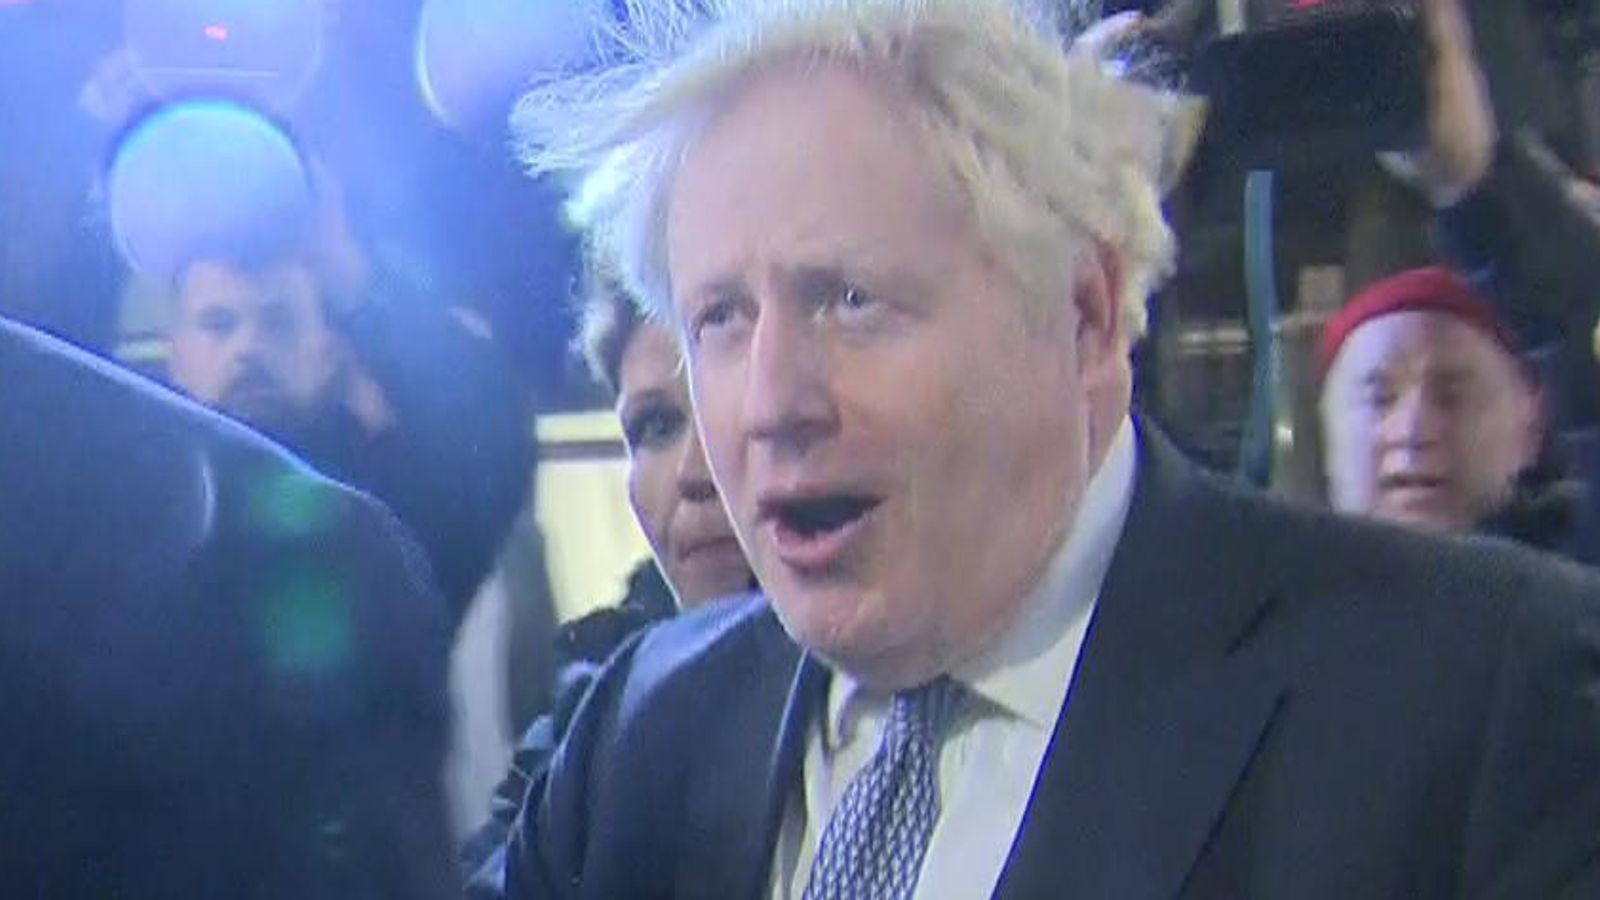 Menteri Luar Negeri menghindari pertanyaan atas klaim ‘sihir’ terbaru Boris Johnson |  Berita politik